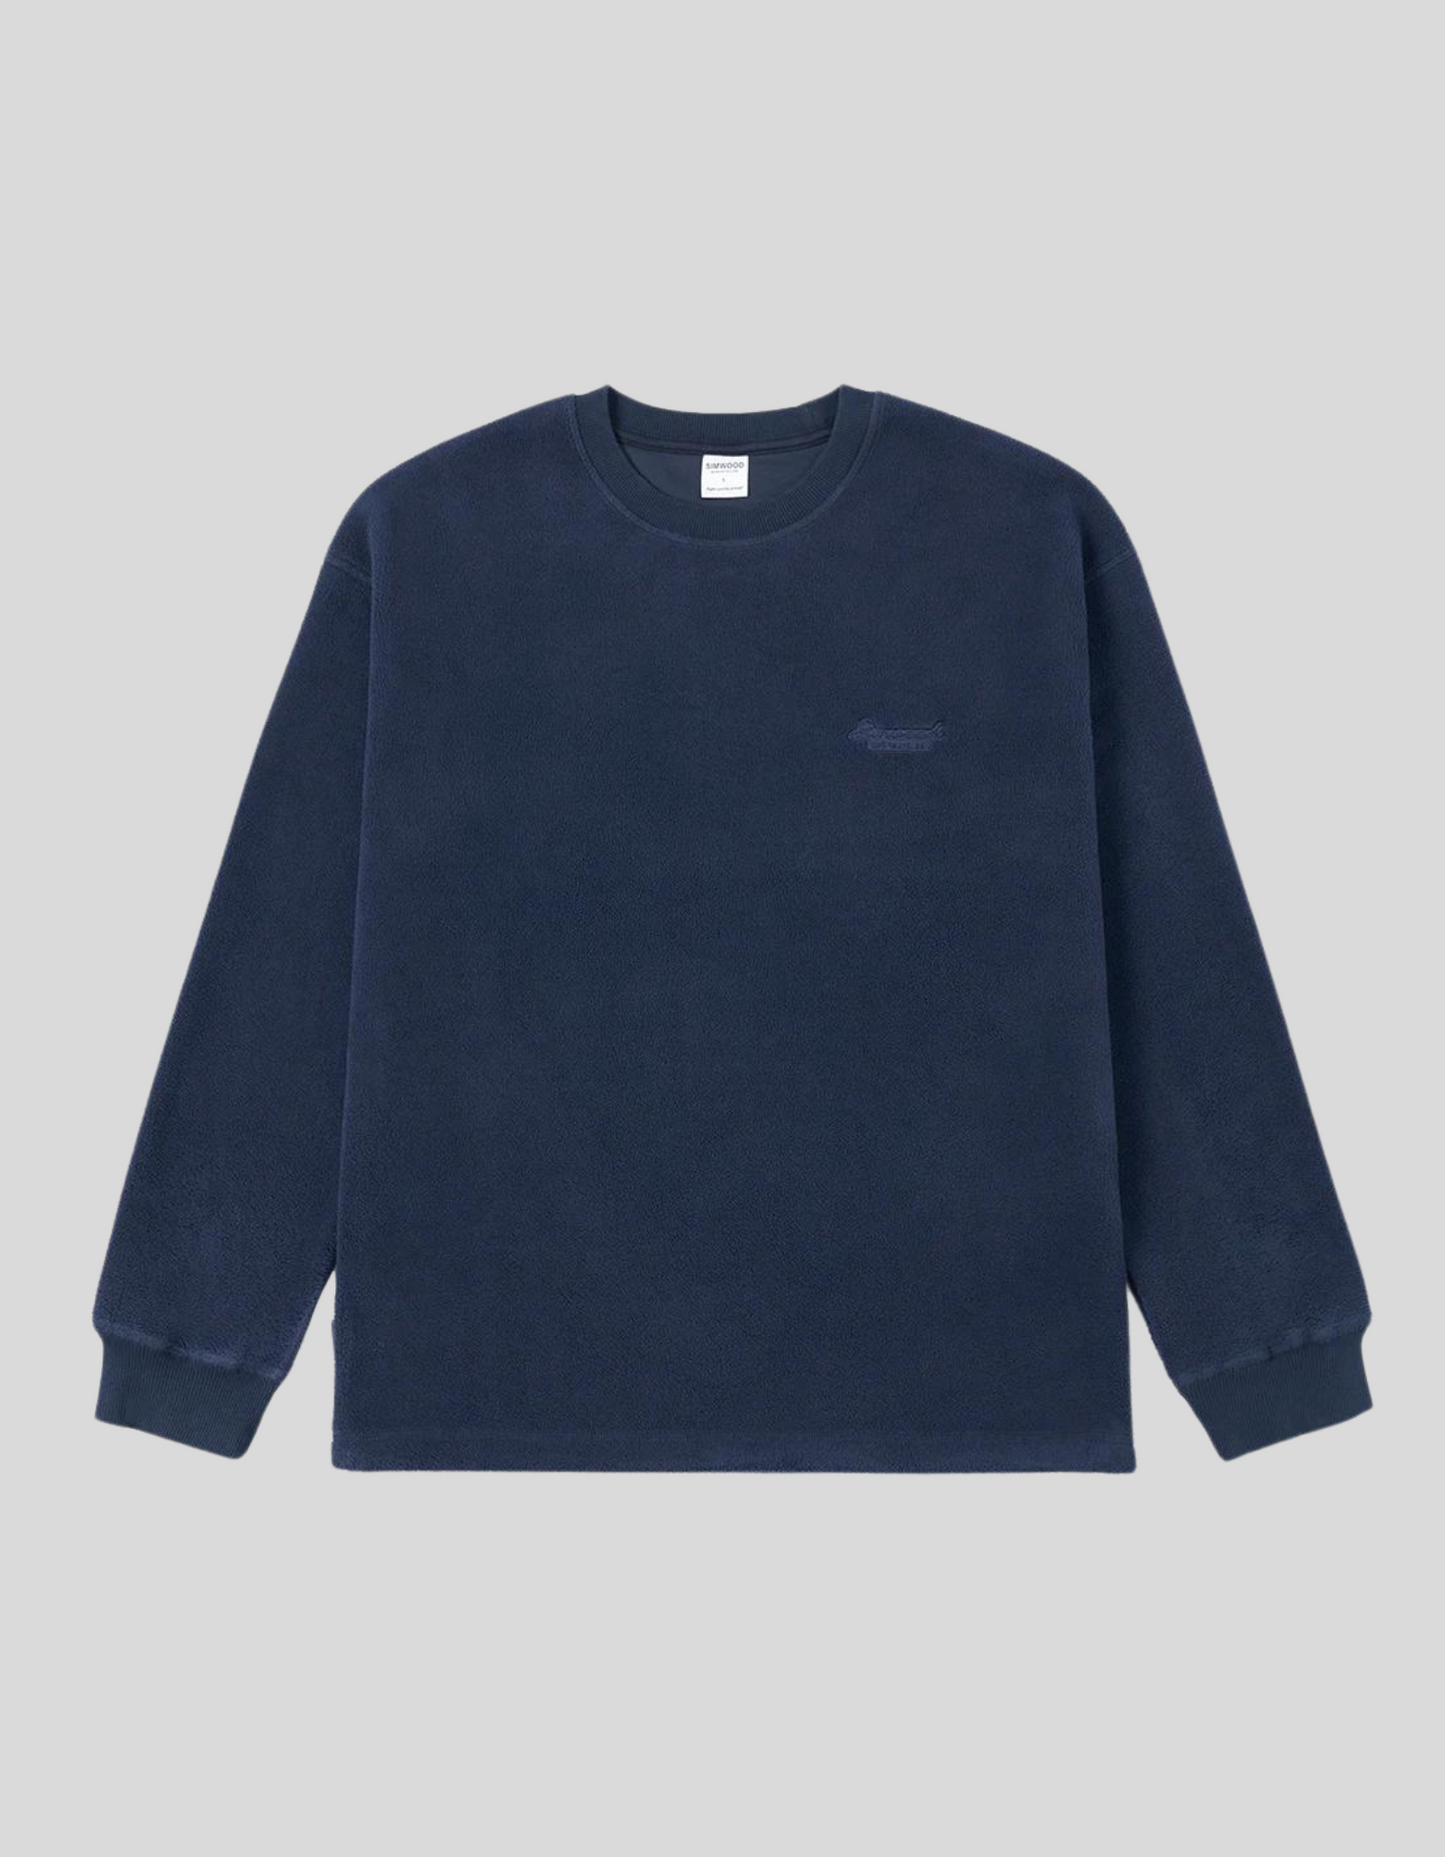 SIMWOOD 330g/sm Men's Navy Blue Polar Fleece Fabric Sweatshirts